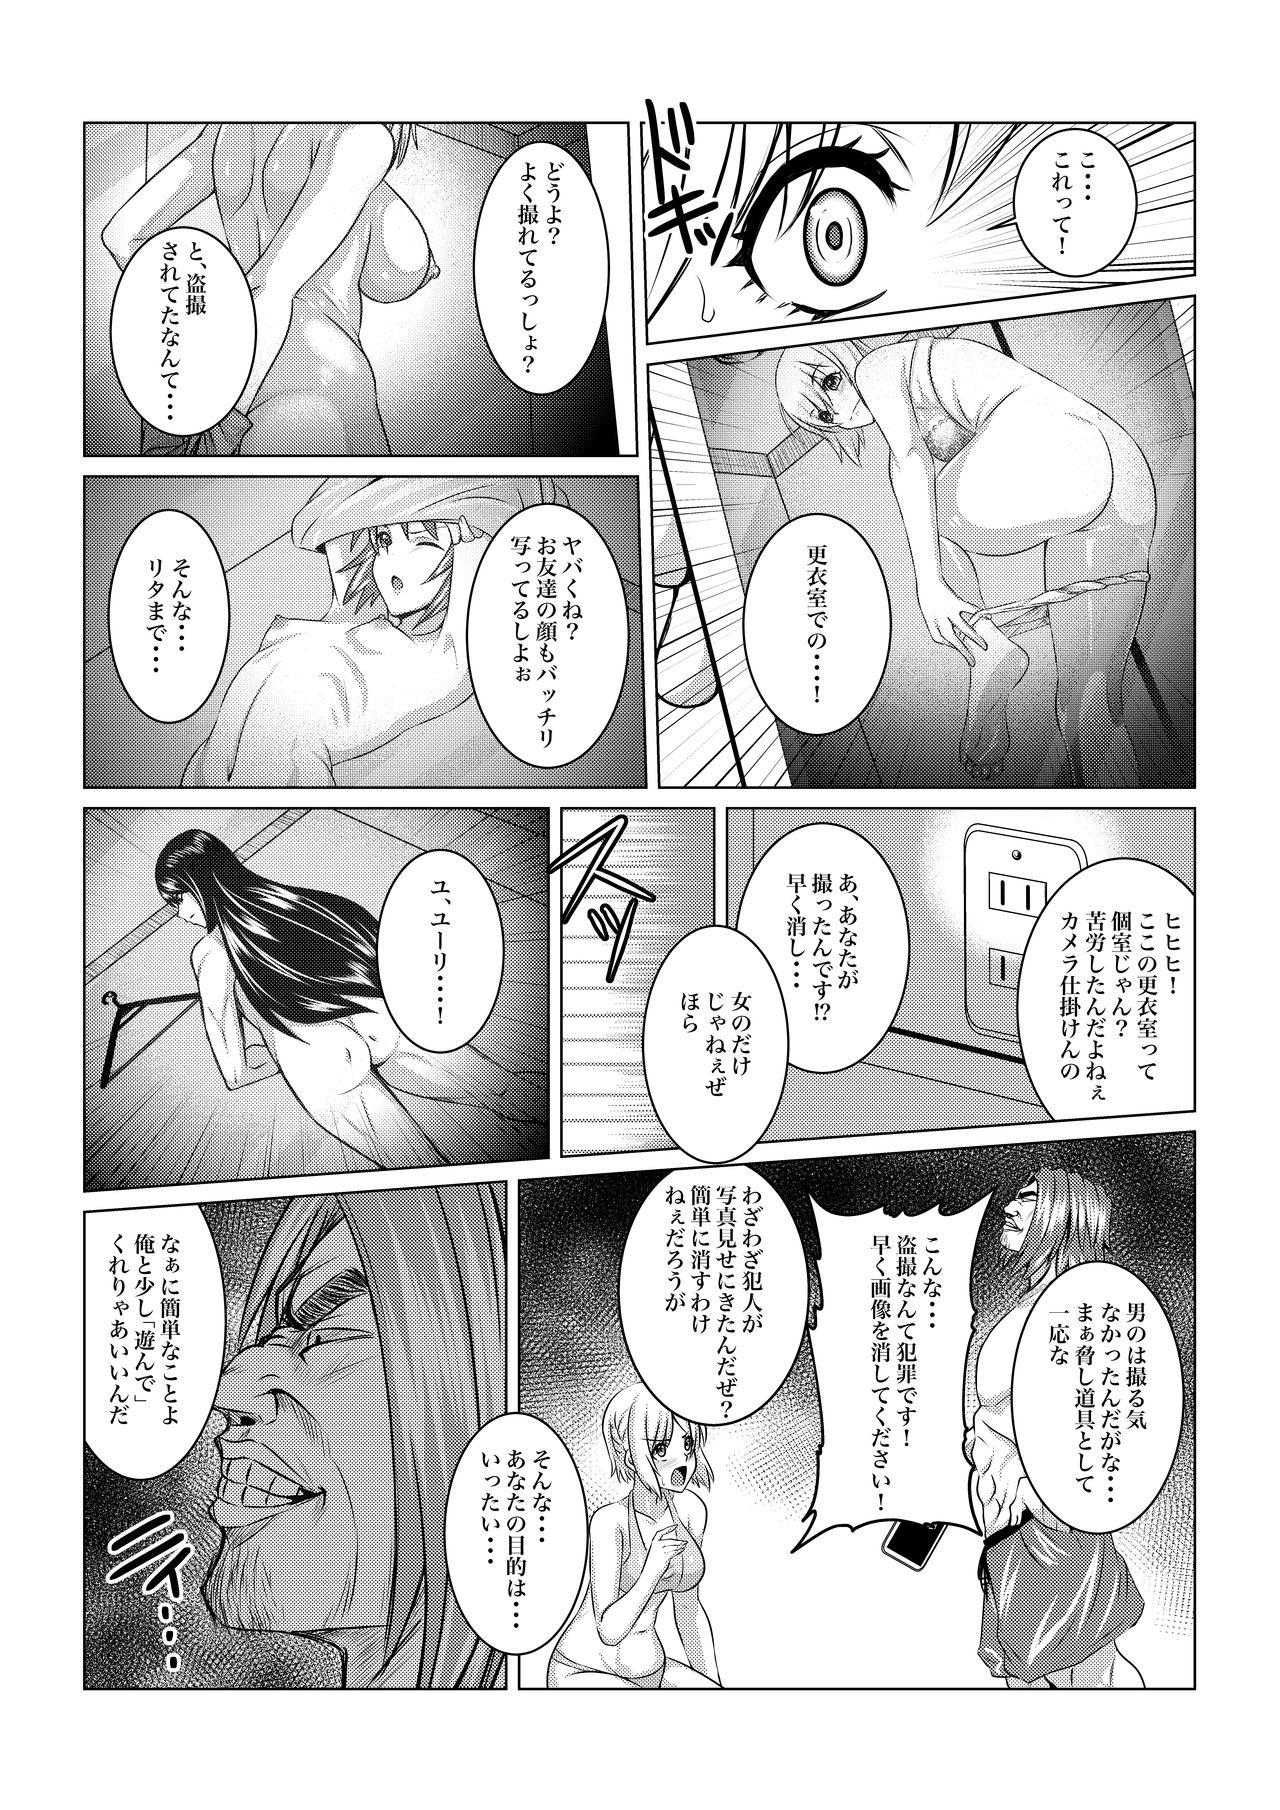 Free Amateur Gekka Midarezaki - Tales of vesperia First - Page 7